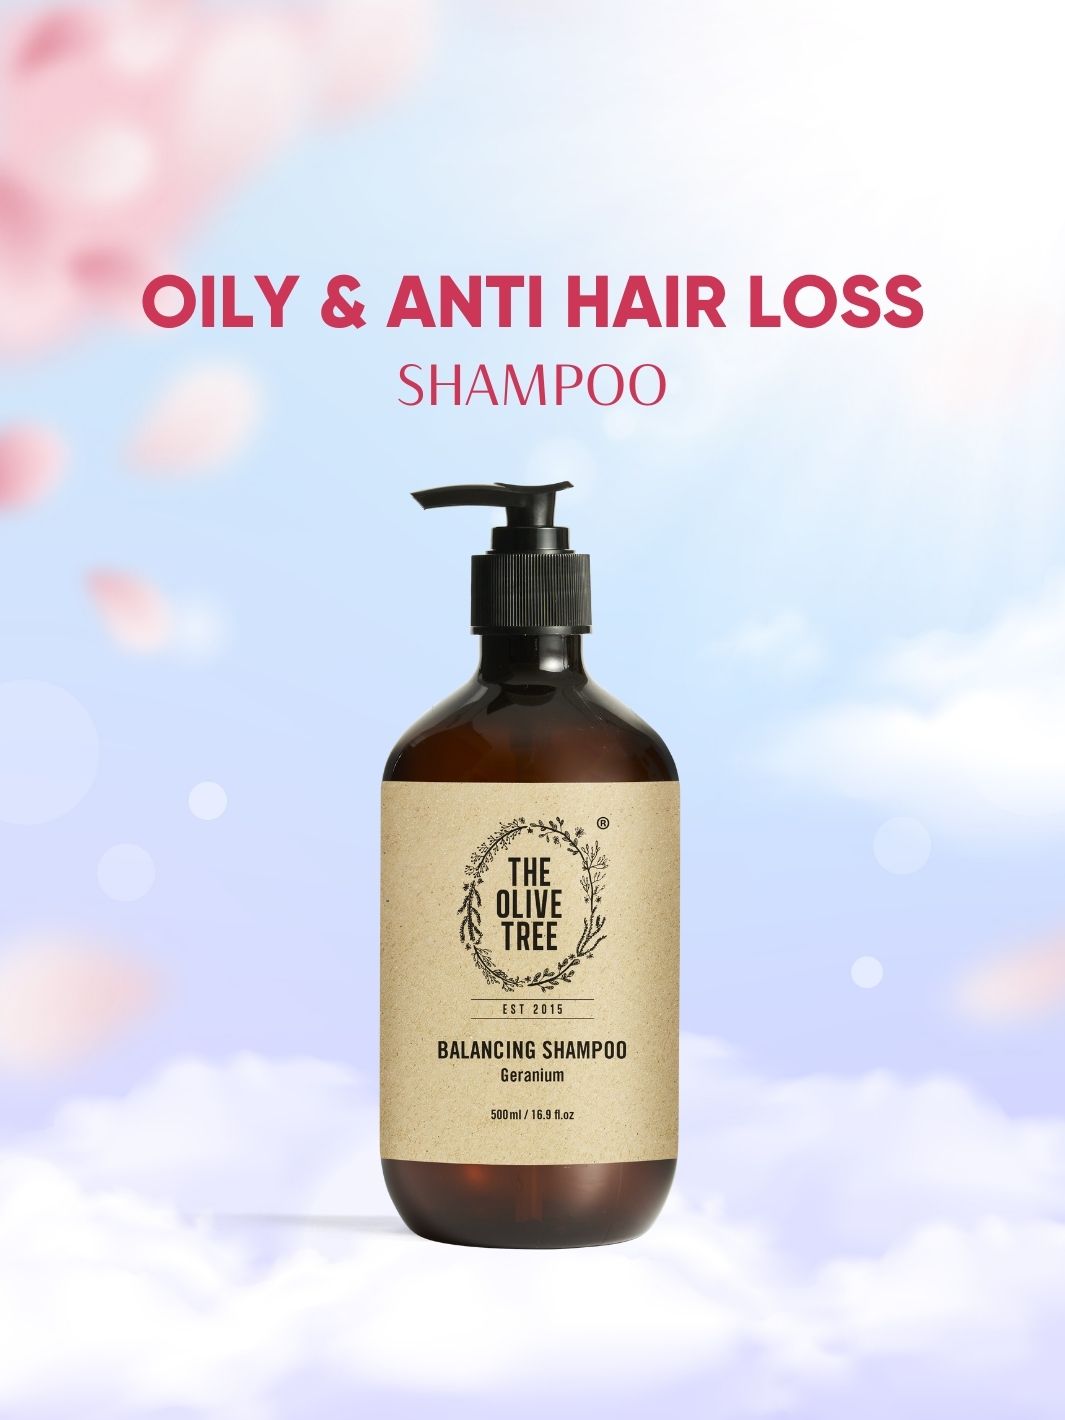 Oily & Anti Hair Loss Balancing Geranium Shampoo